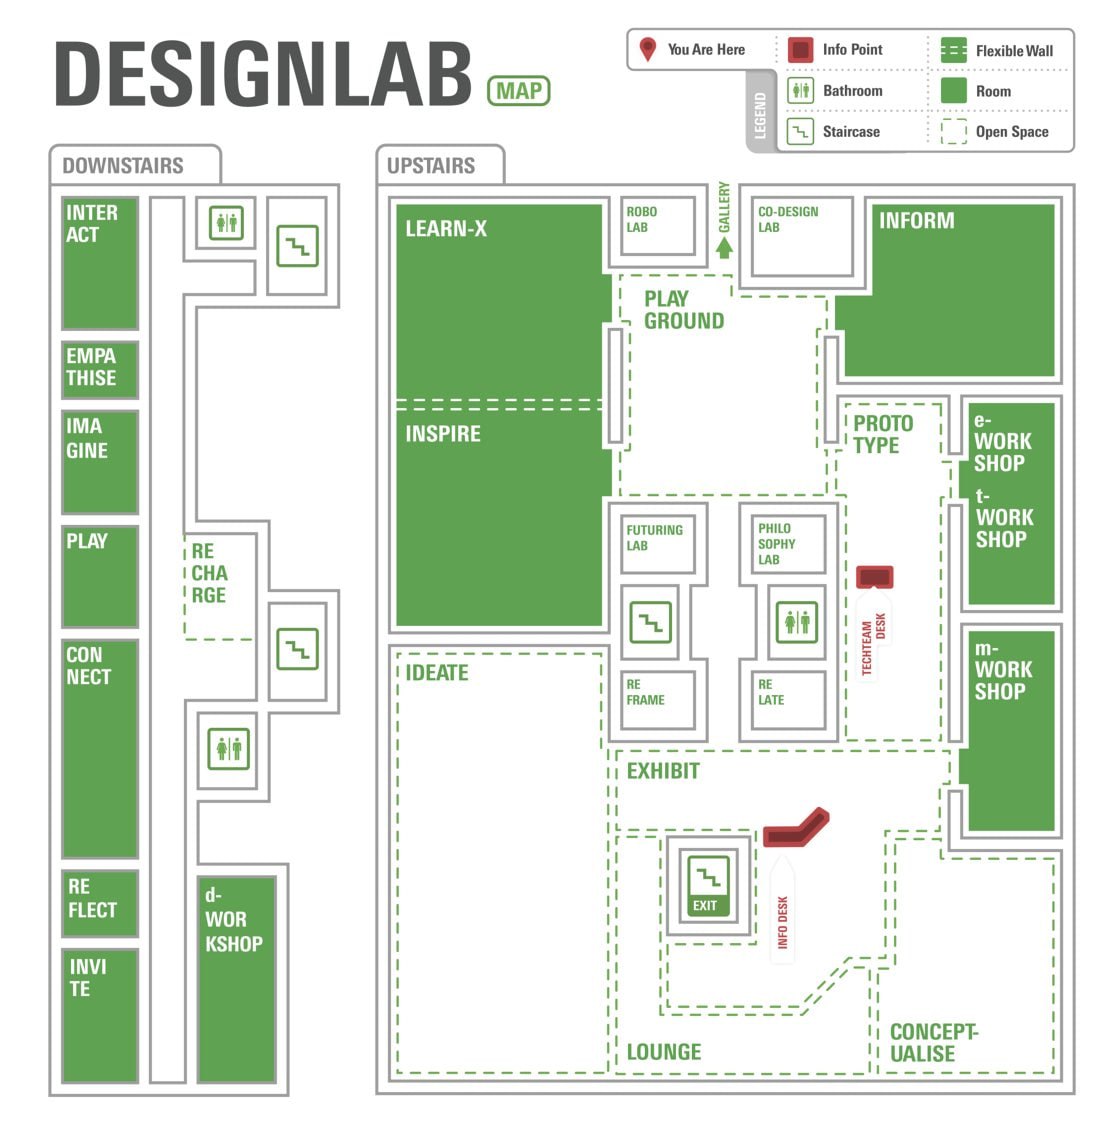 Map of Designlab building